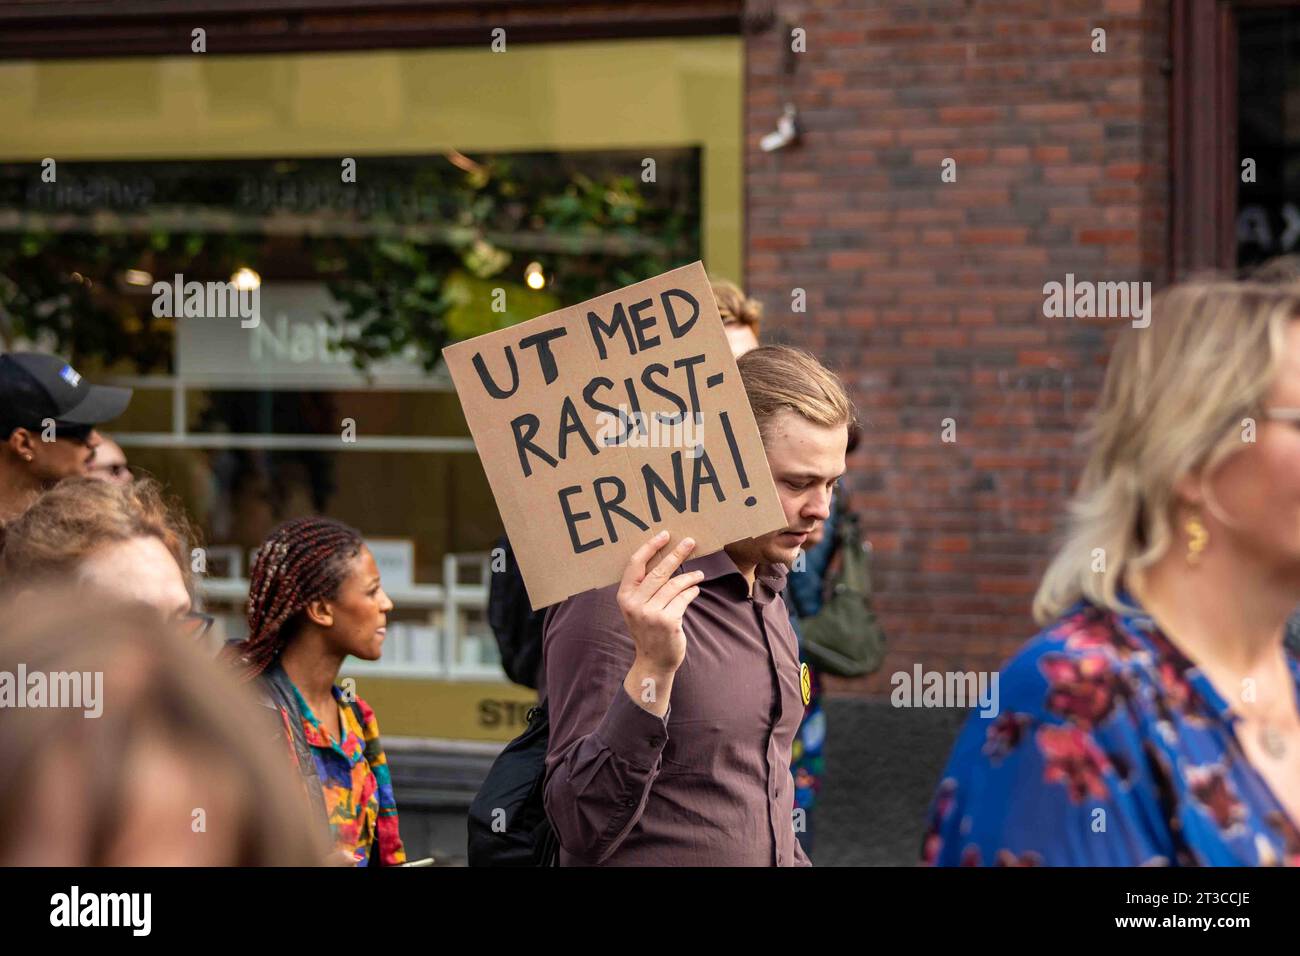 UT med Rasisterna! Ein Demonstrant hält ein handgefertigtes Pappschild auf mich, emme vaikene! Anti-Rassismus-Demonstration in Helsinki, Finnland. Stockfoto